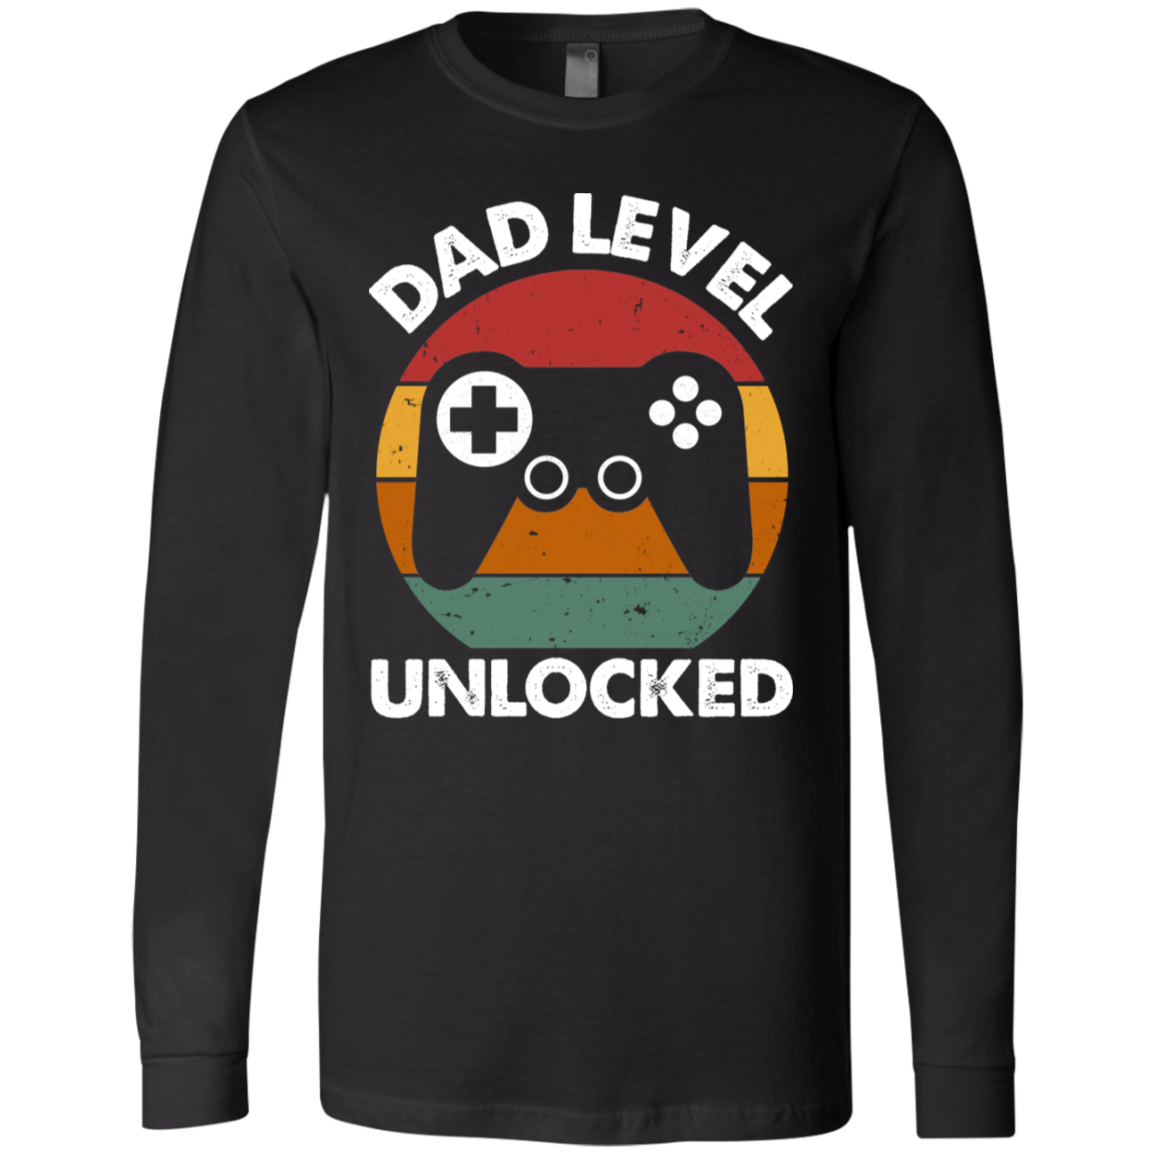 Dad Level Unlocked Jersey LS T-Shirt